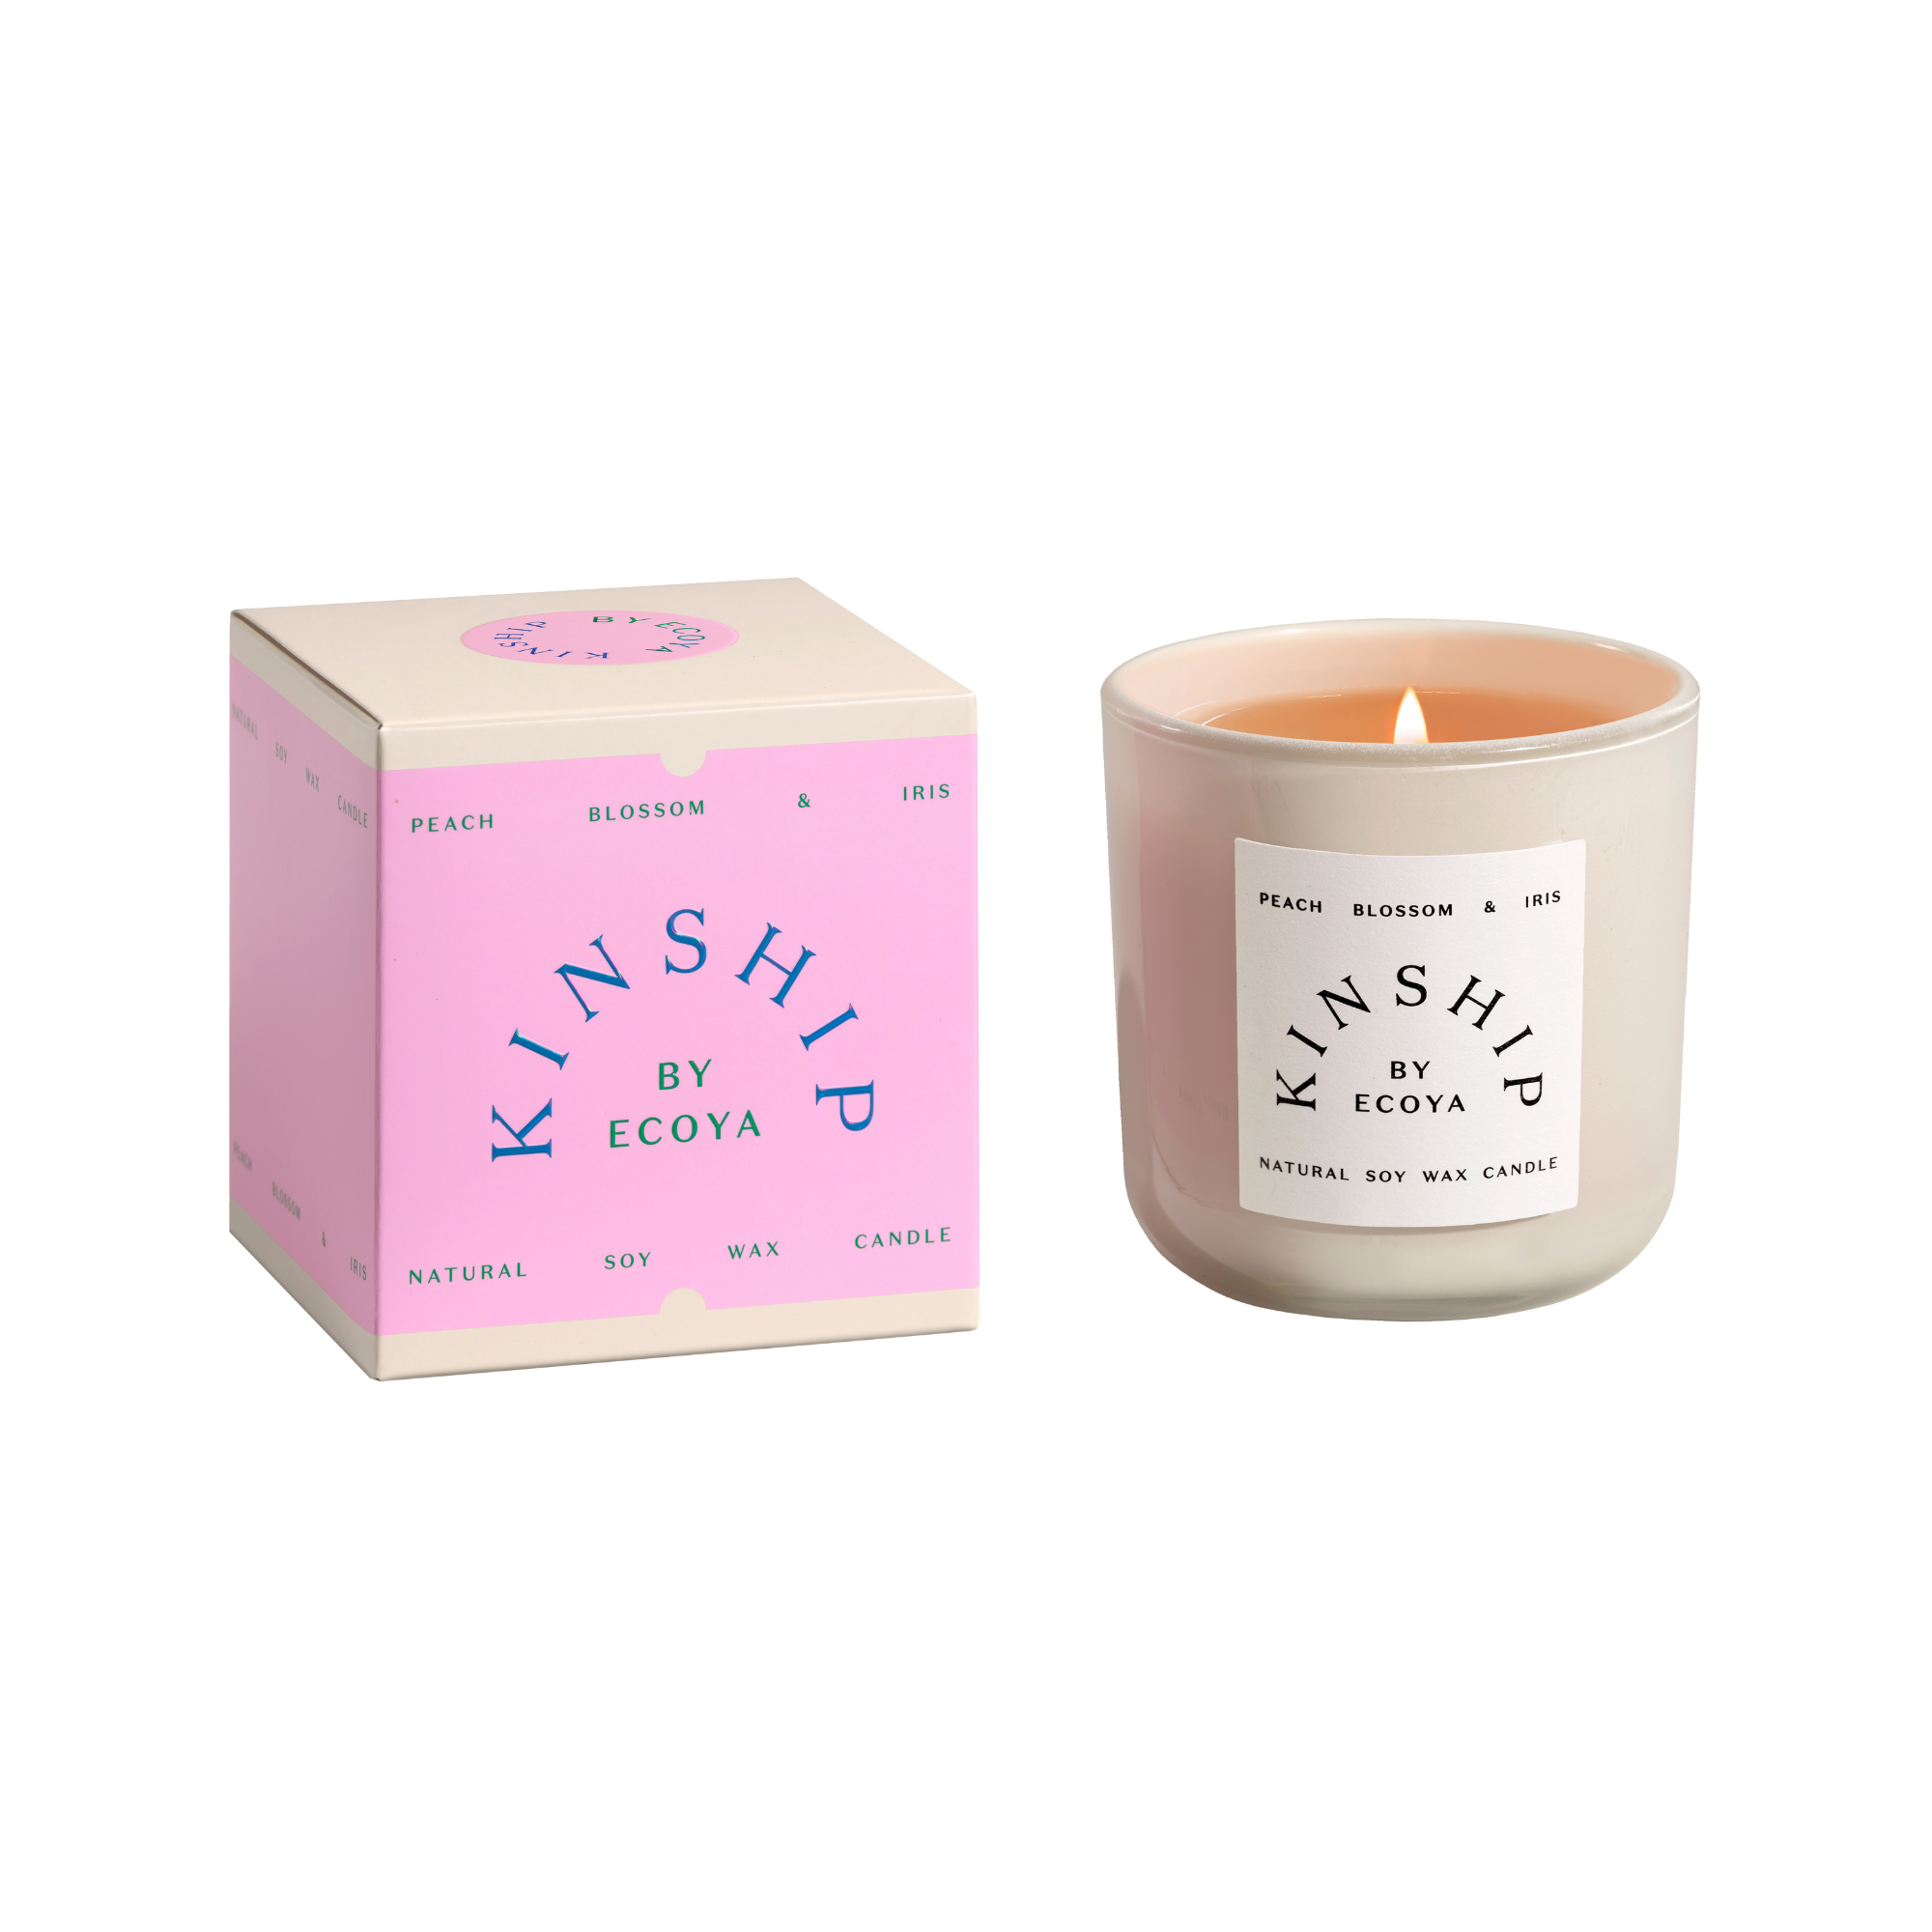 Ecoya Kinship - Peach Blossom & Iris Candle 375g